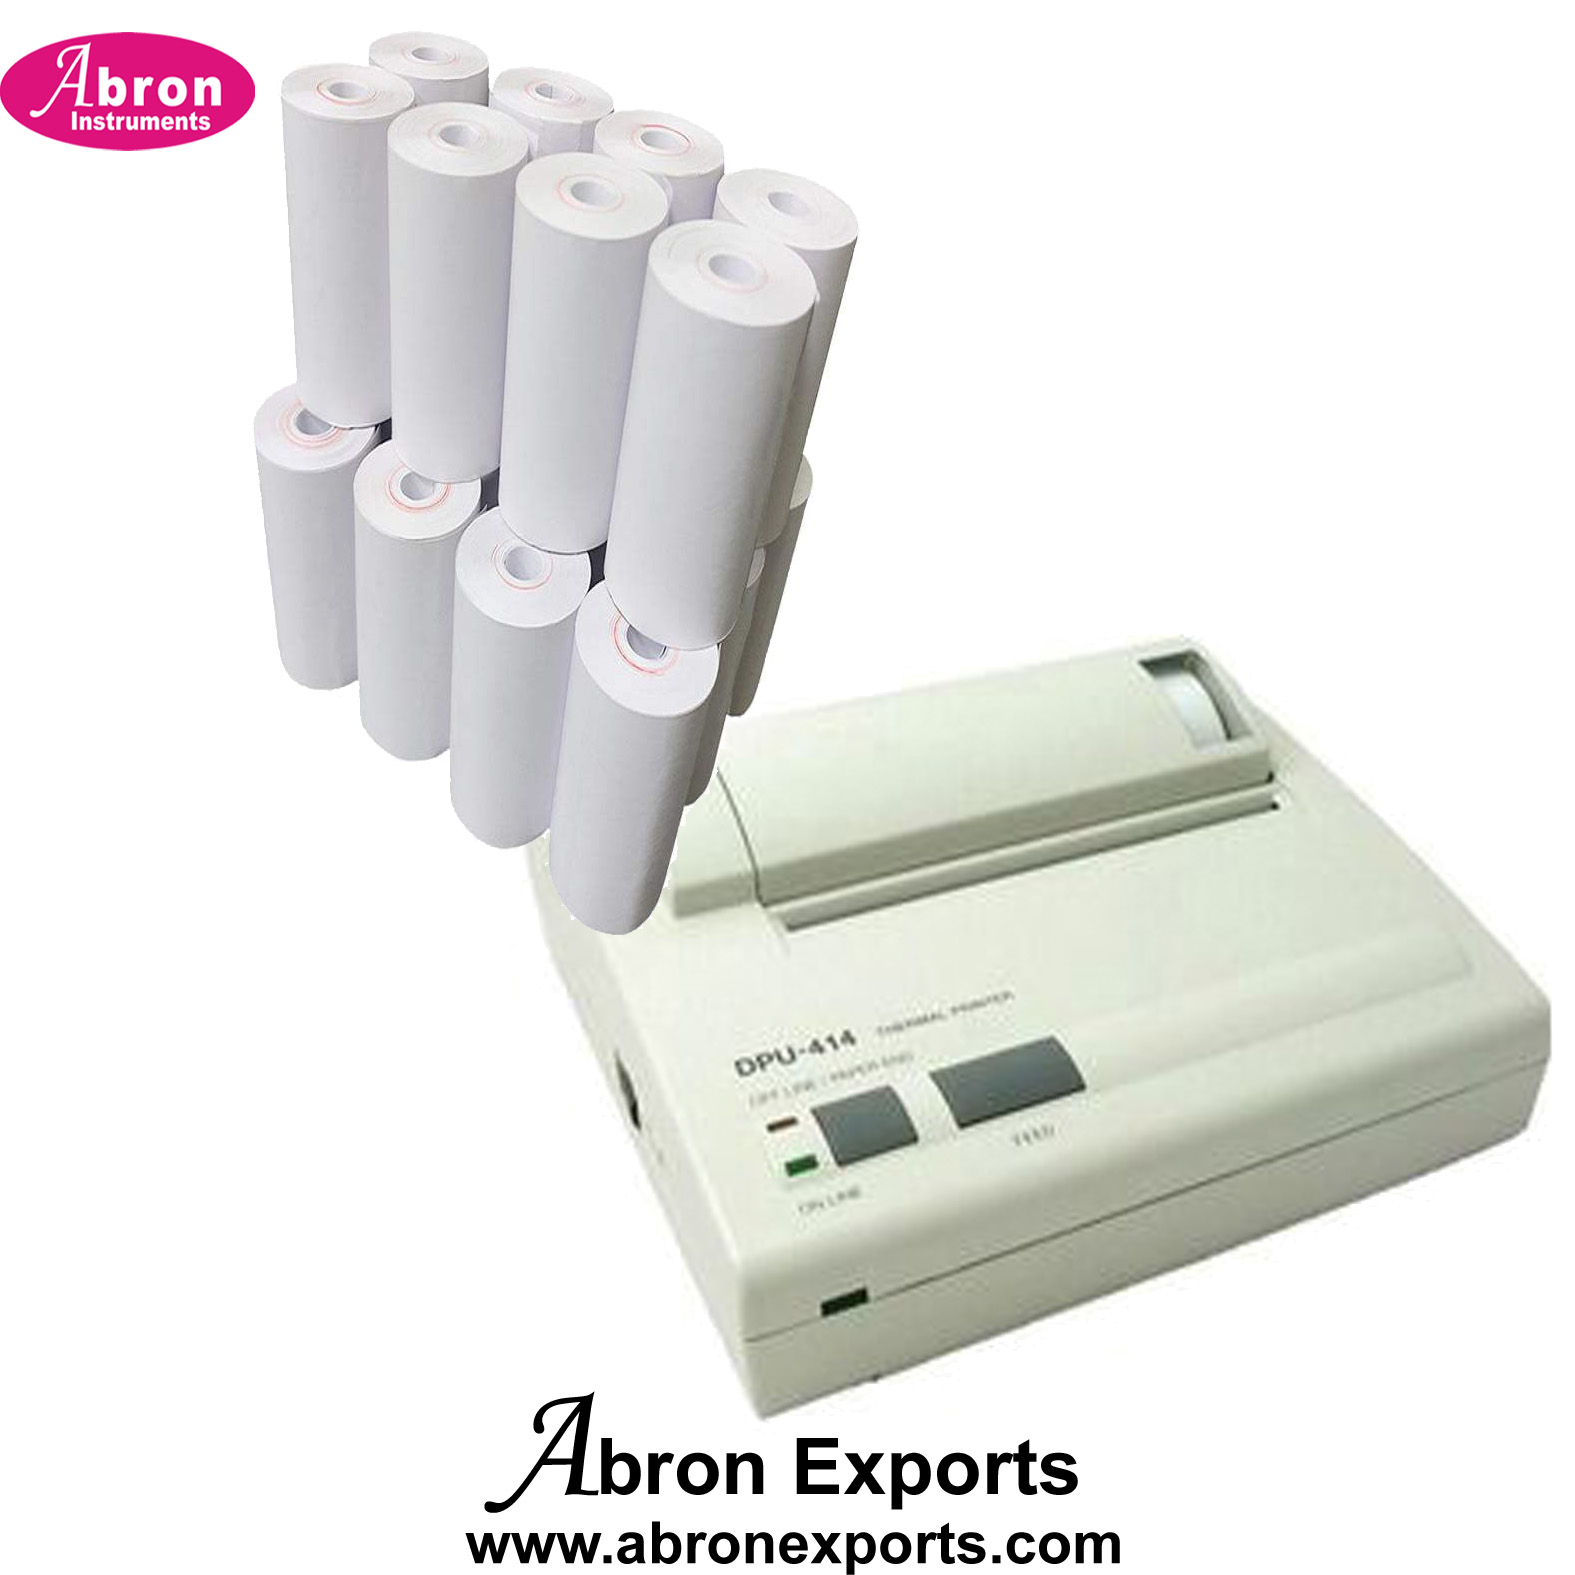 Thermal paper 110mm 4 inch sutable for thermal printers DPU 414 abron  ECG printer pack of 10 rolls ABM-2501P4